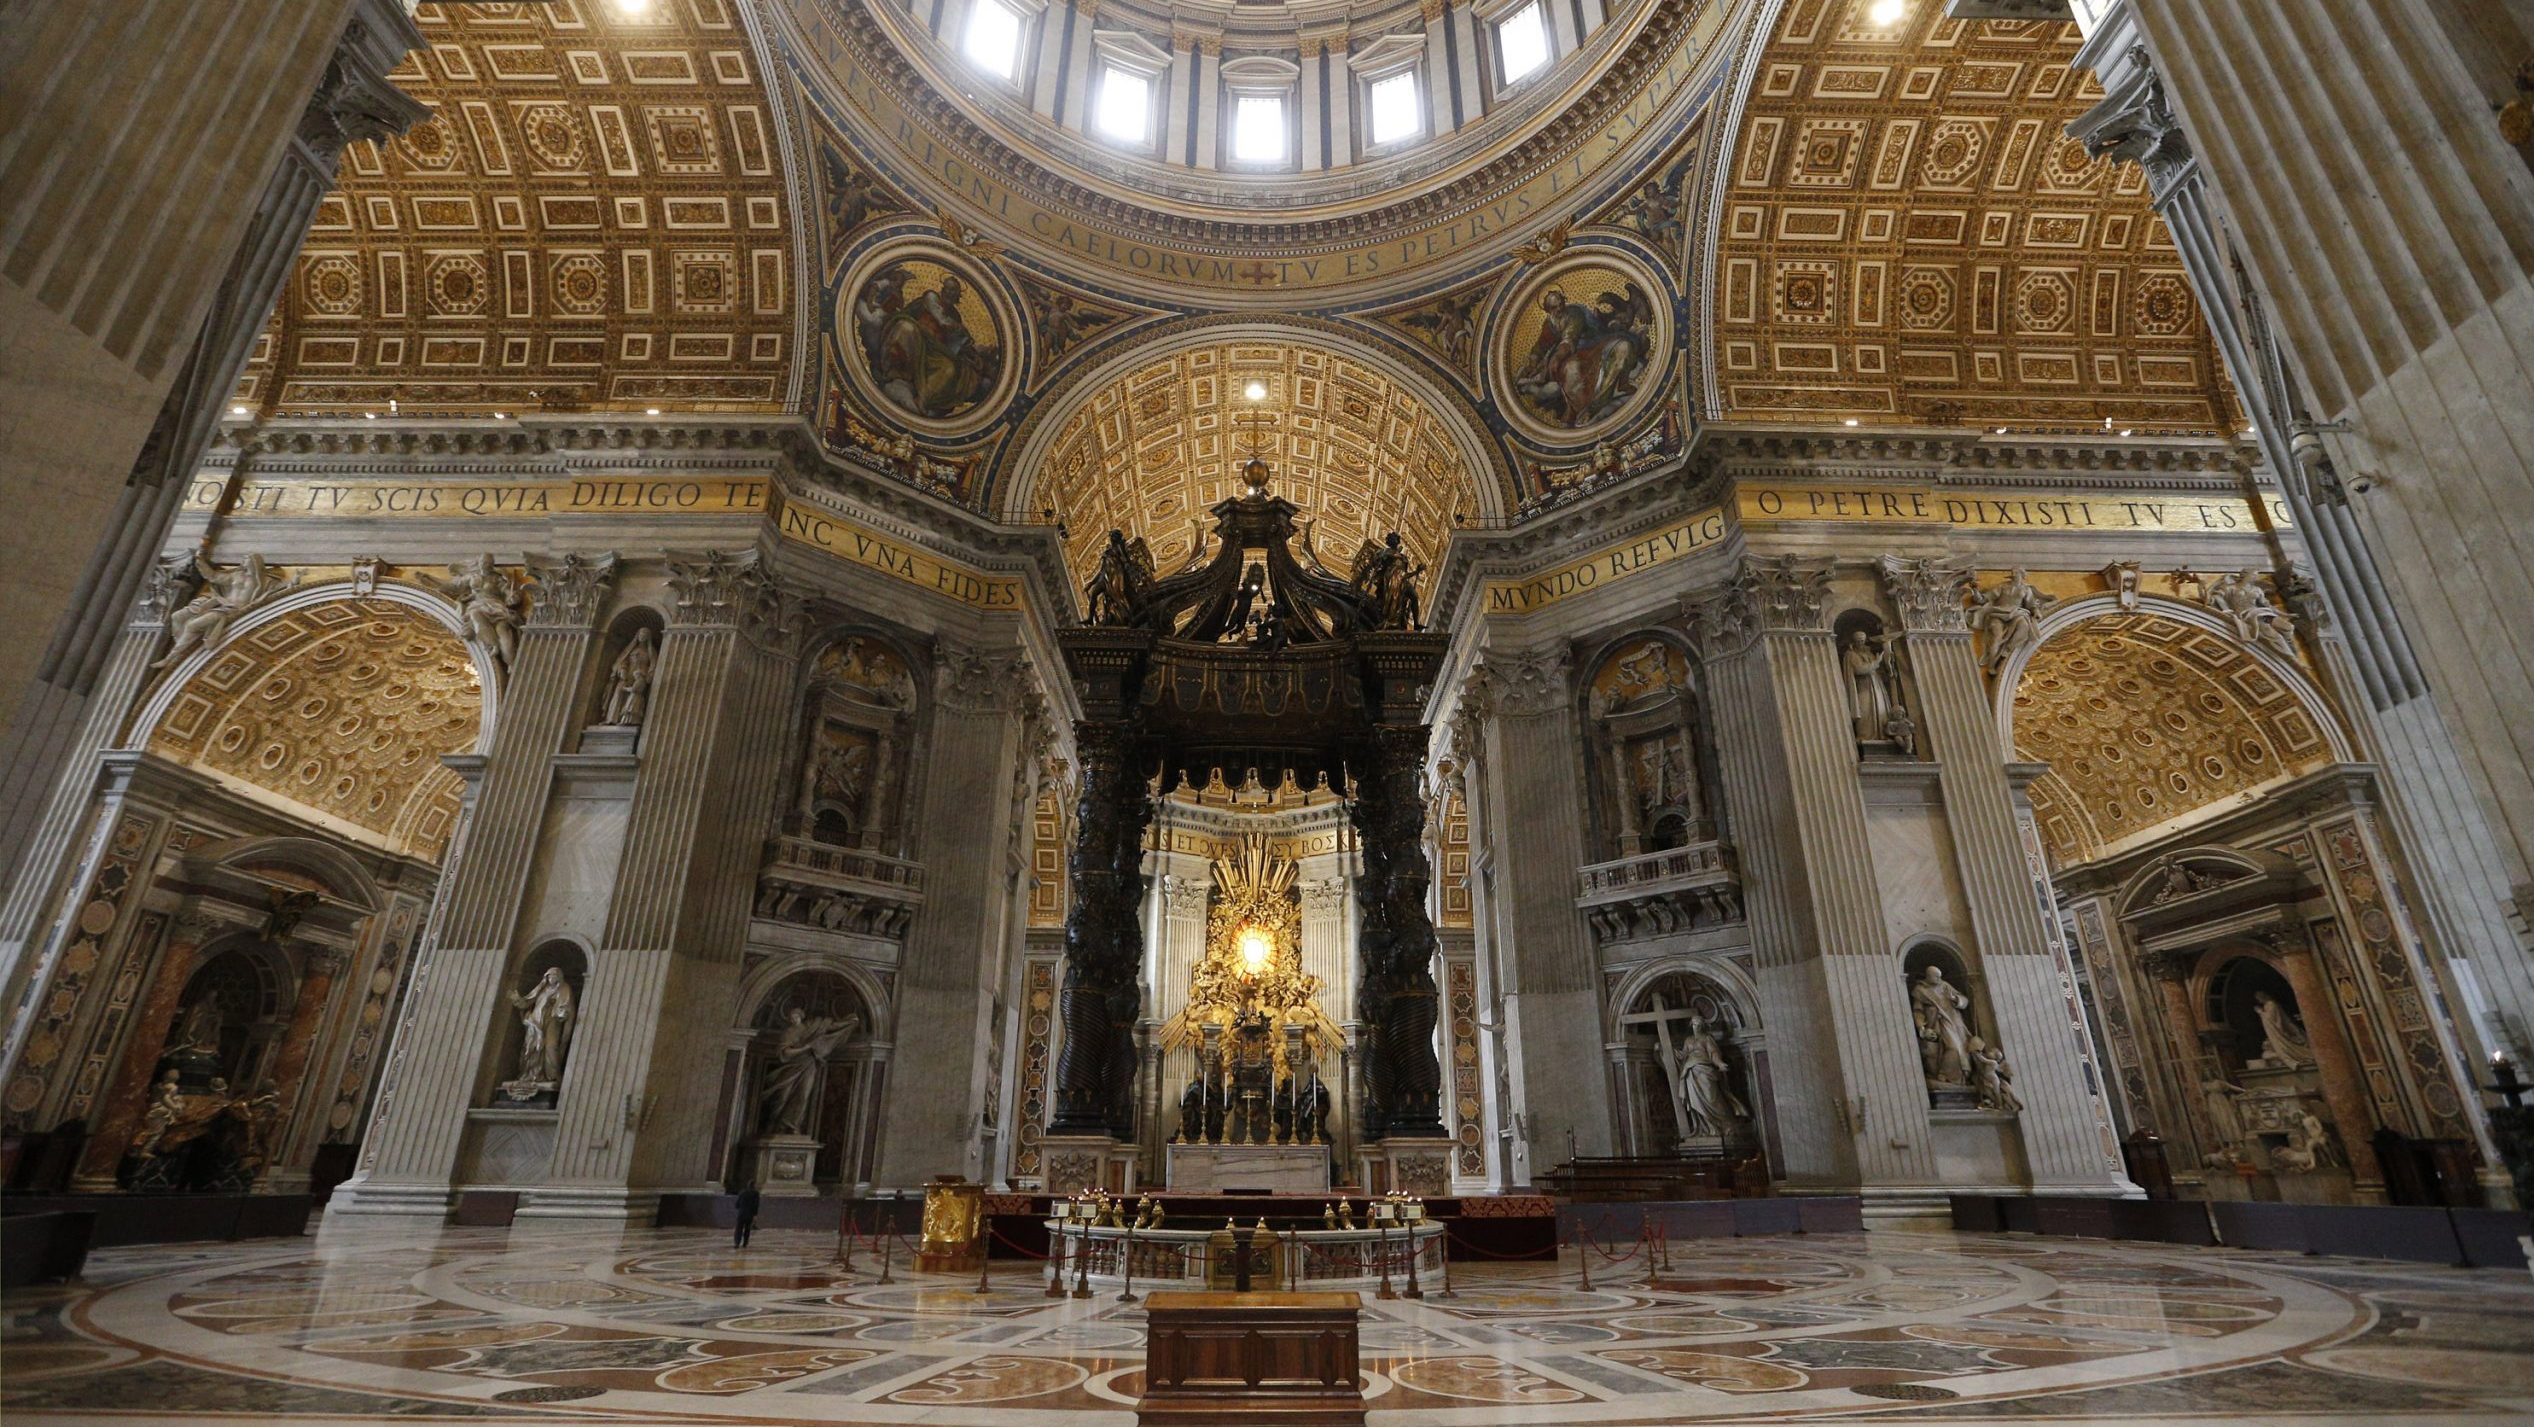 2020 Vatican